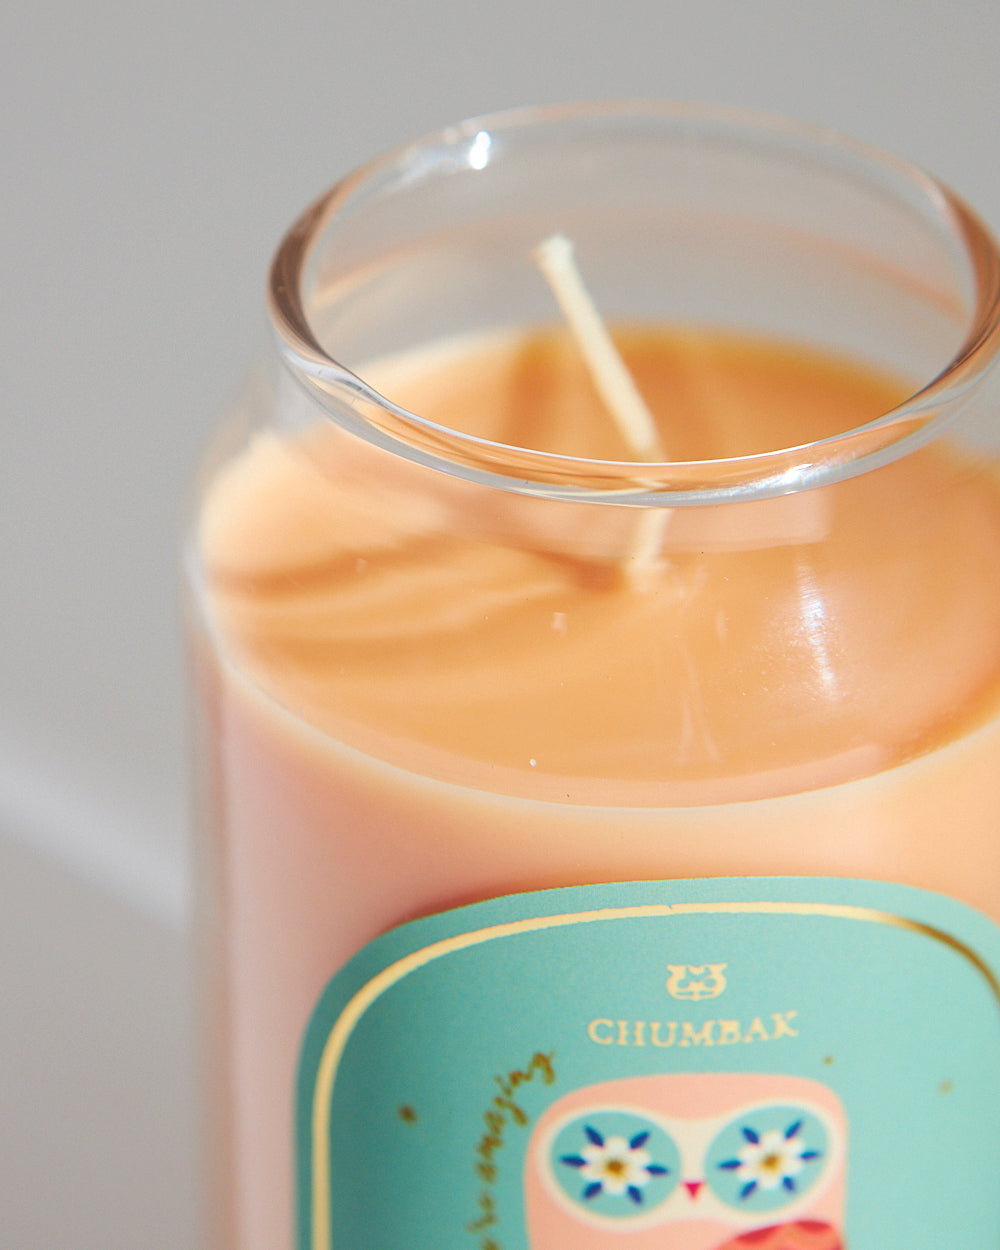 Apple Cinnamon Soy Wax Candle, 265g